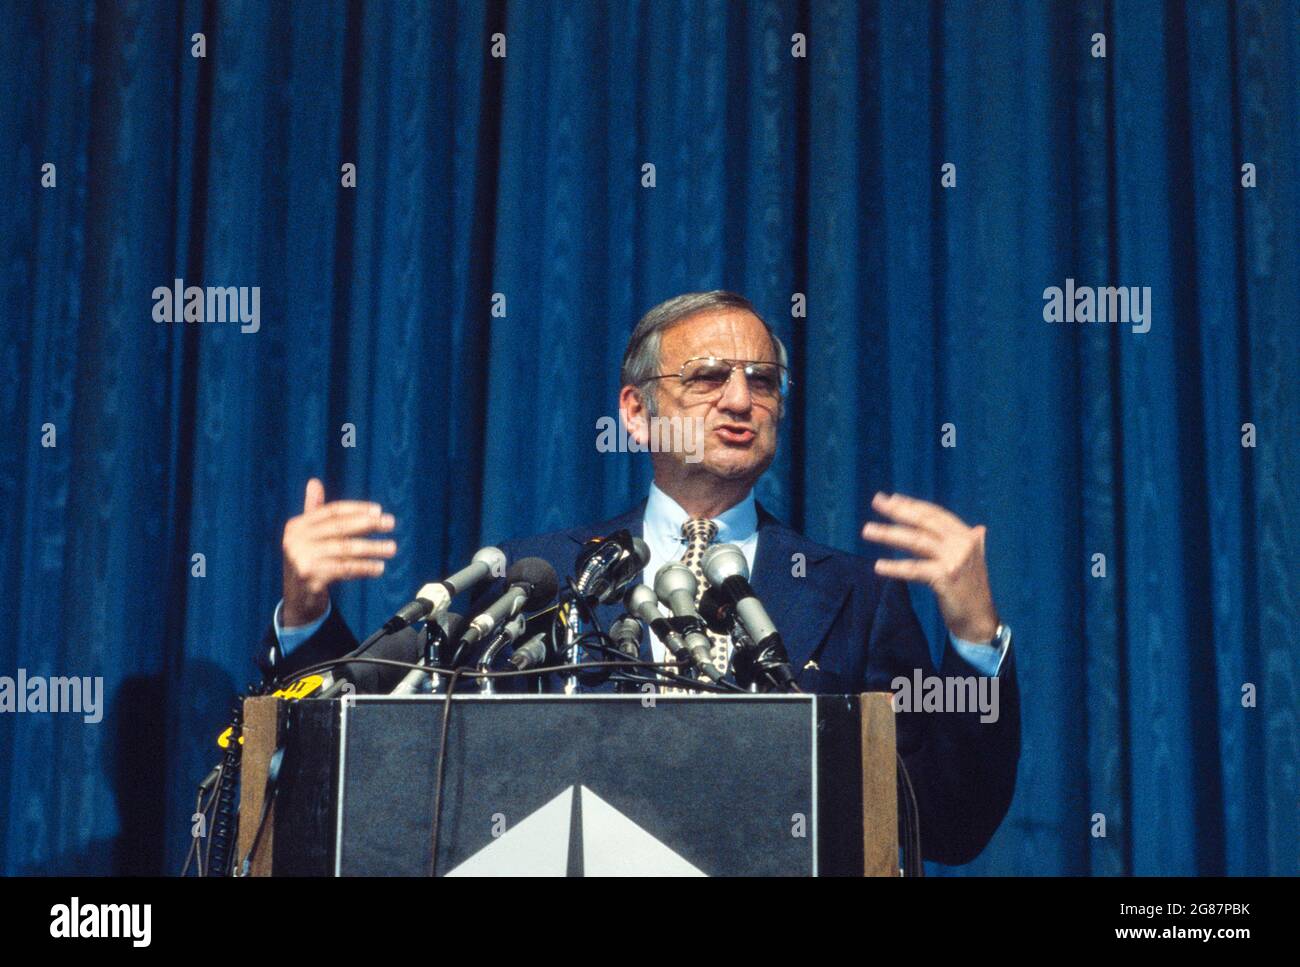 Lee Iacocca, Chairman of Chrysler Corporation, speaking at Press Conference, Bernard Gotfryd, 1980 Stock Photo